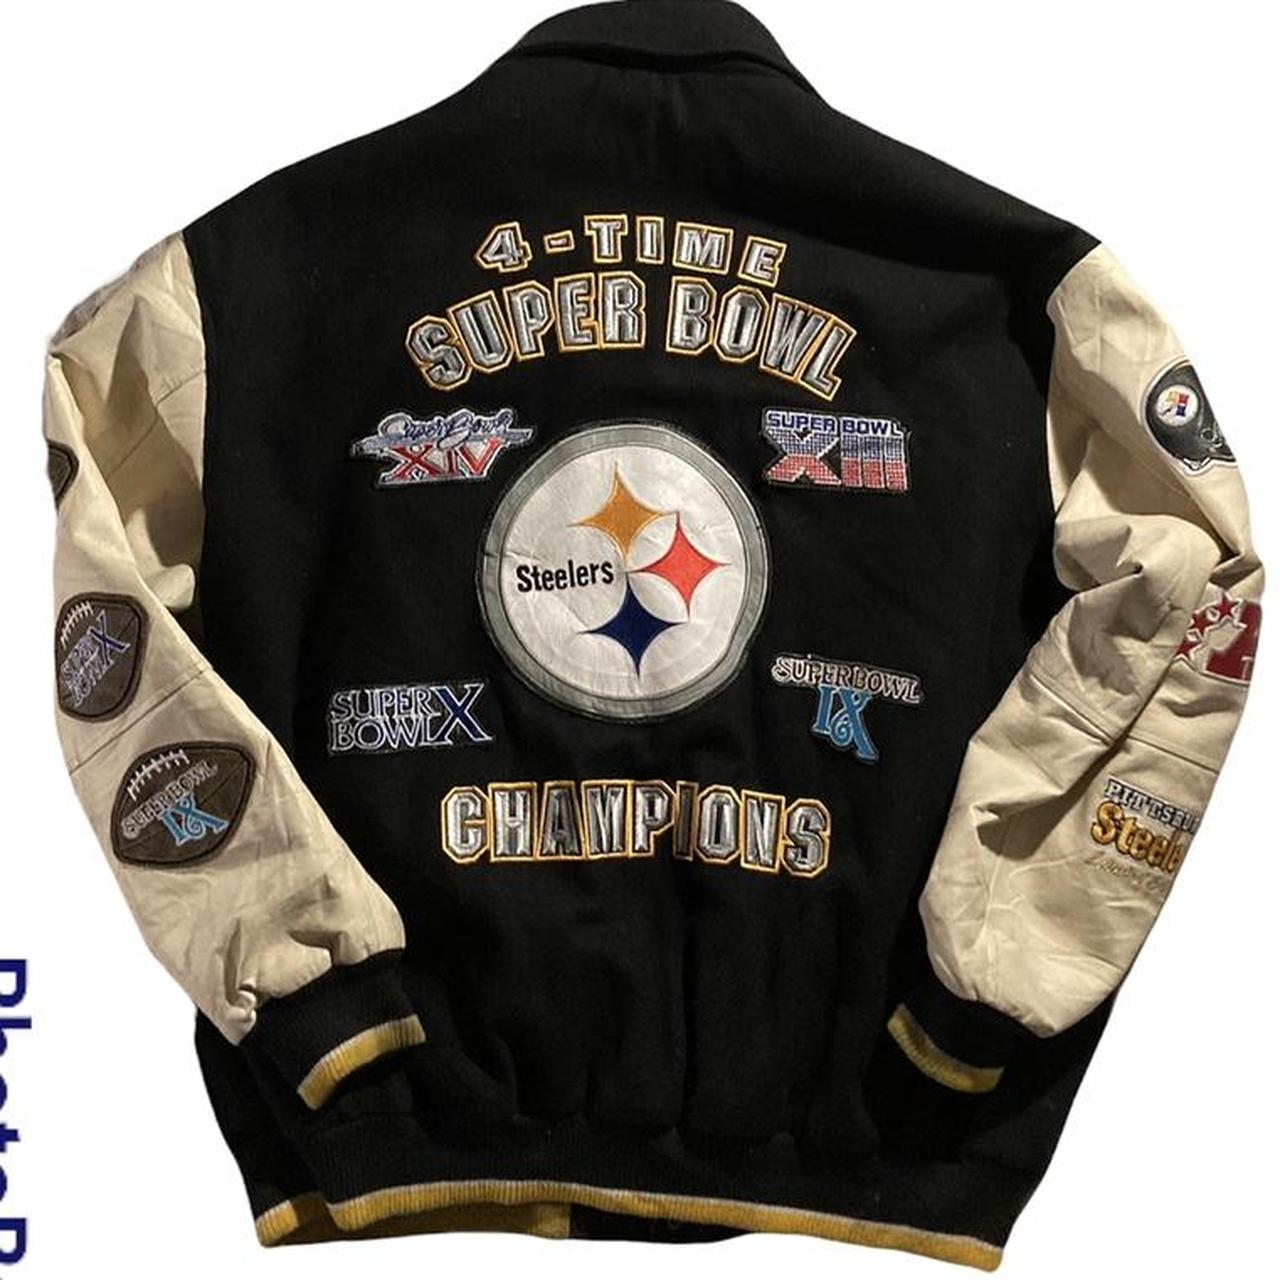 Varsity Pittsburgh Steelers Black Leather Jacket